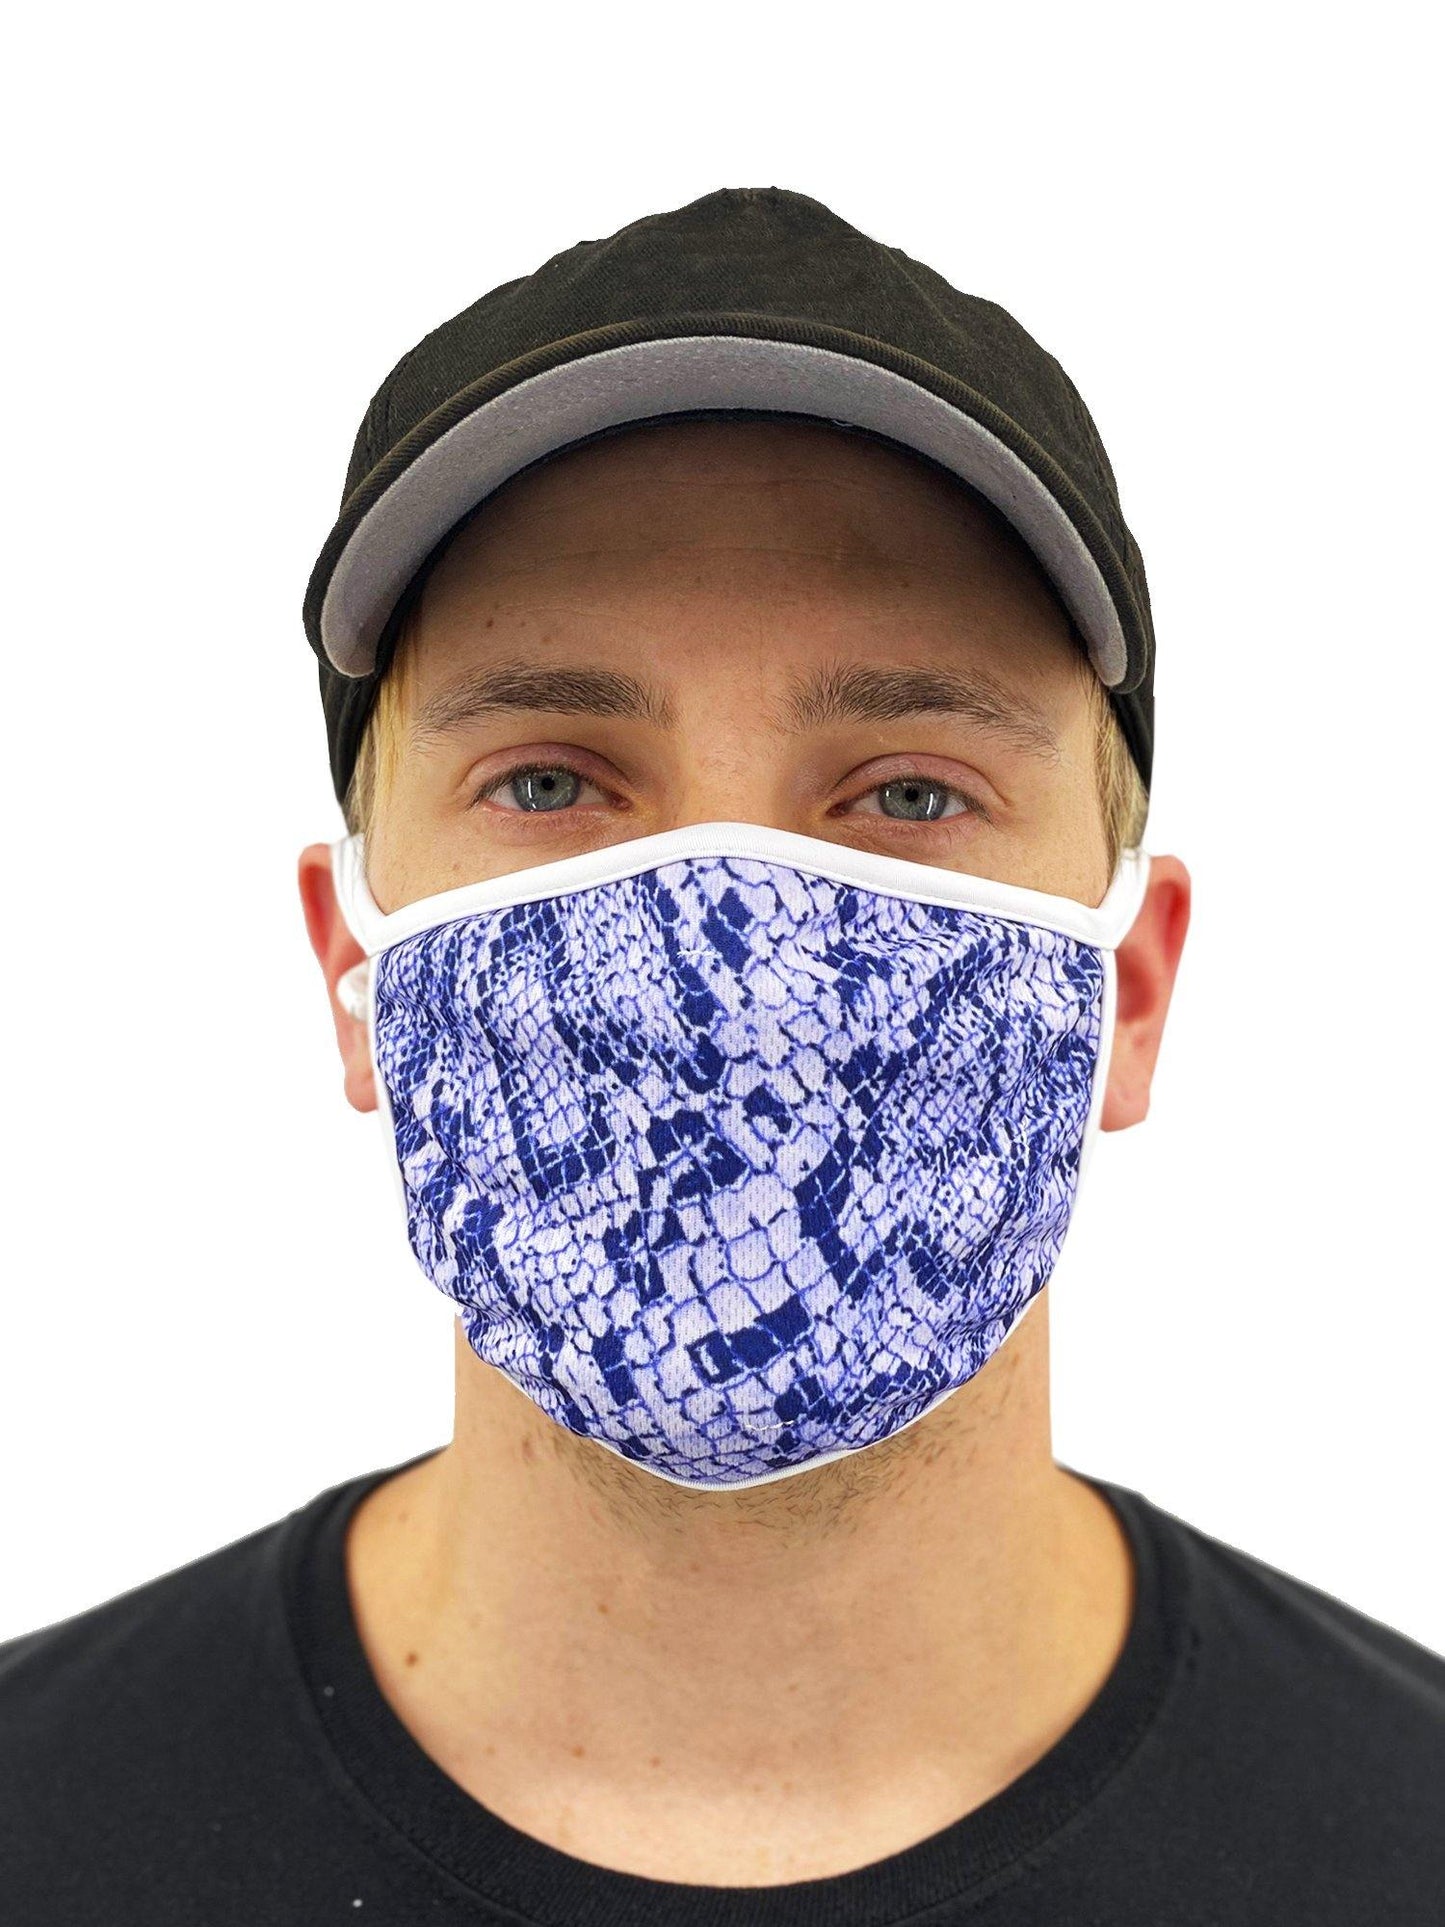 Blue Snakeskin Face Mask With Filter Pocket - USA Made Dropship